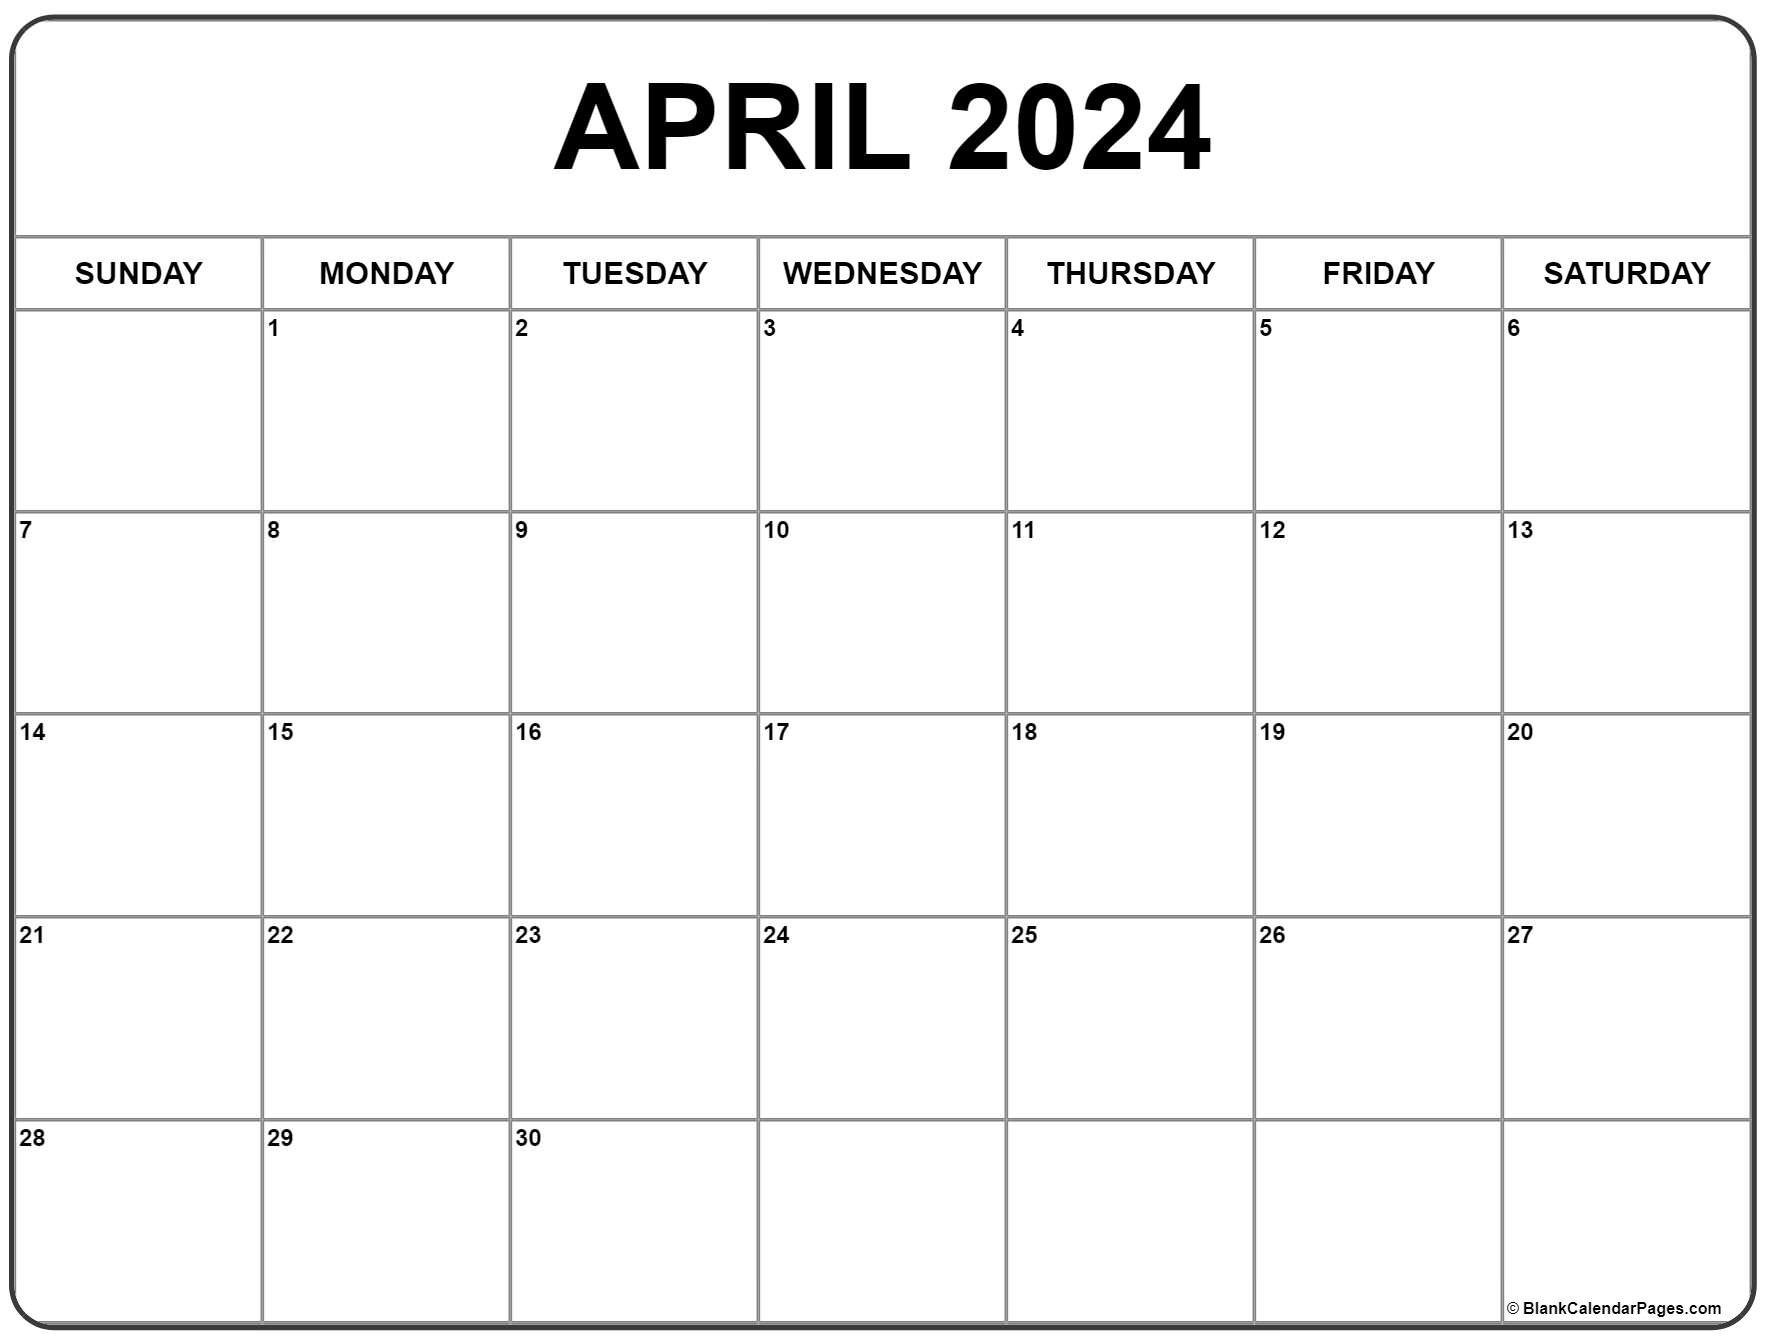 April 2024 Calendar | Free Printable Calendar for April 2024 Calendar Page Printable